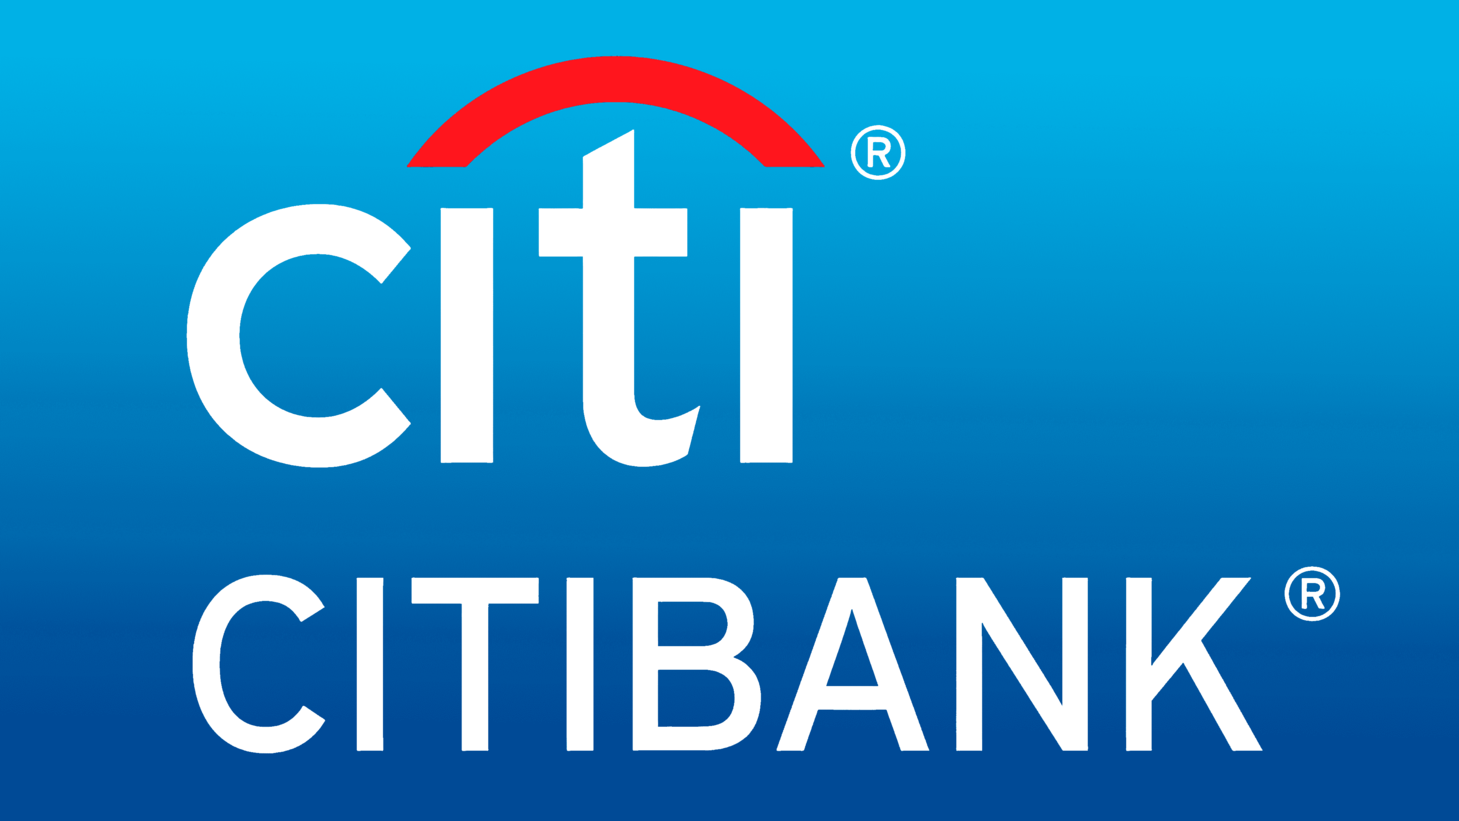 Citibank symbol